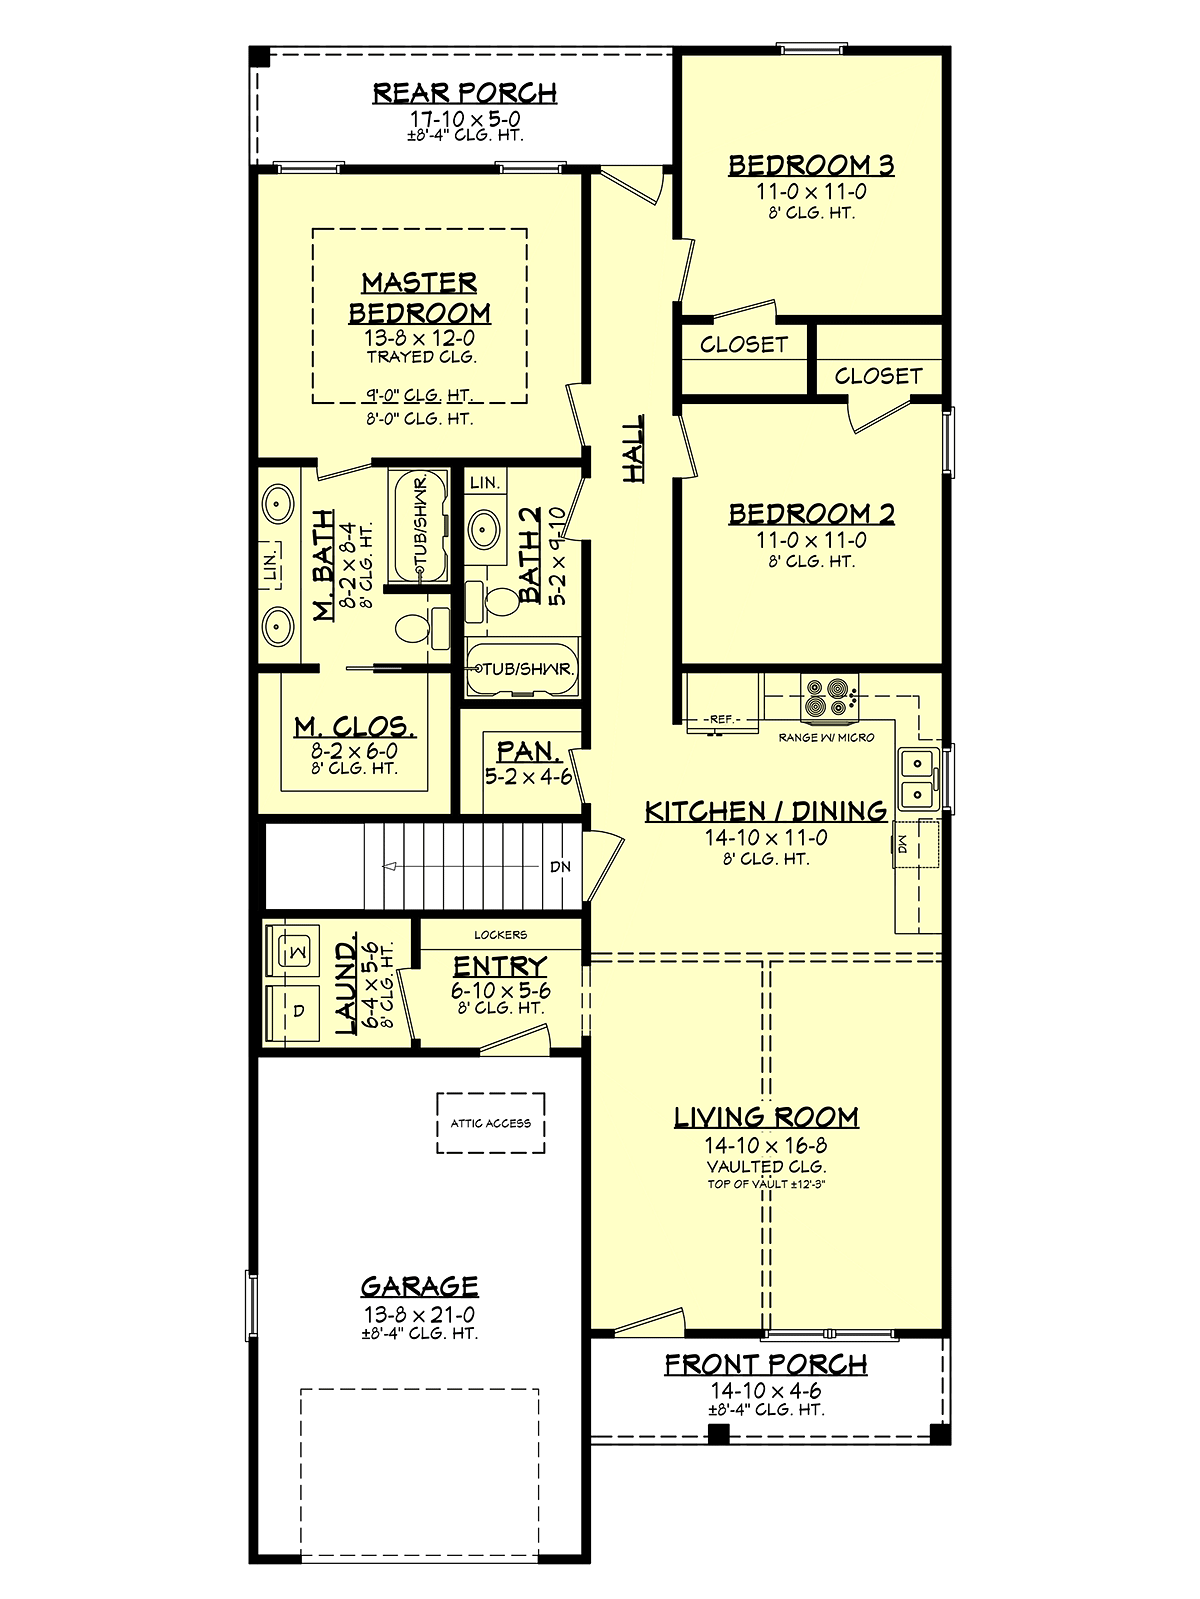 House Plan 56702 Alternate Level One